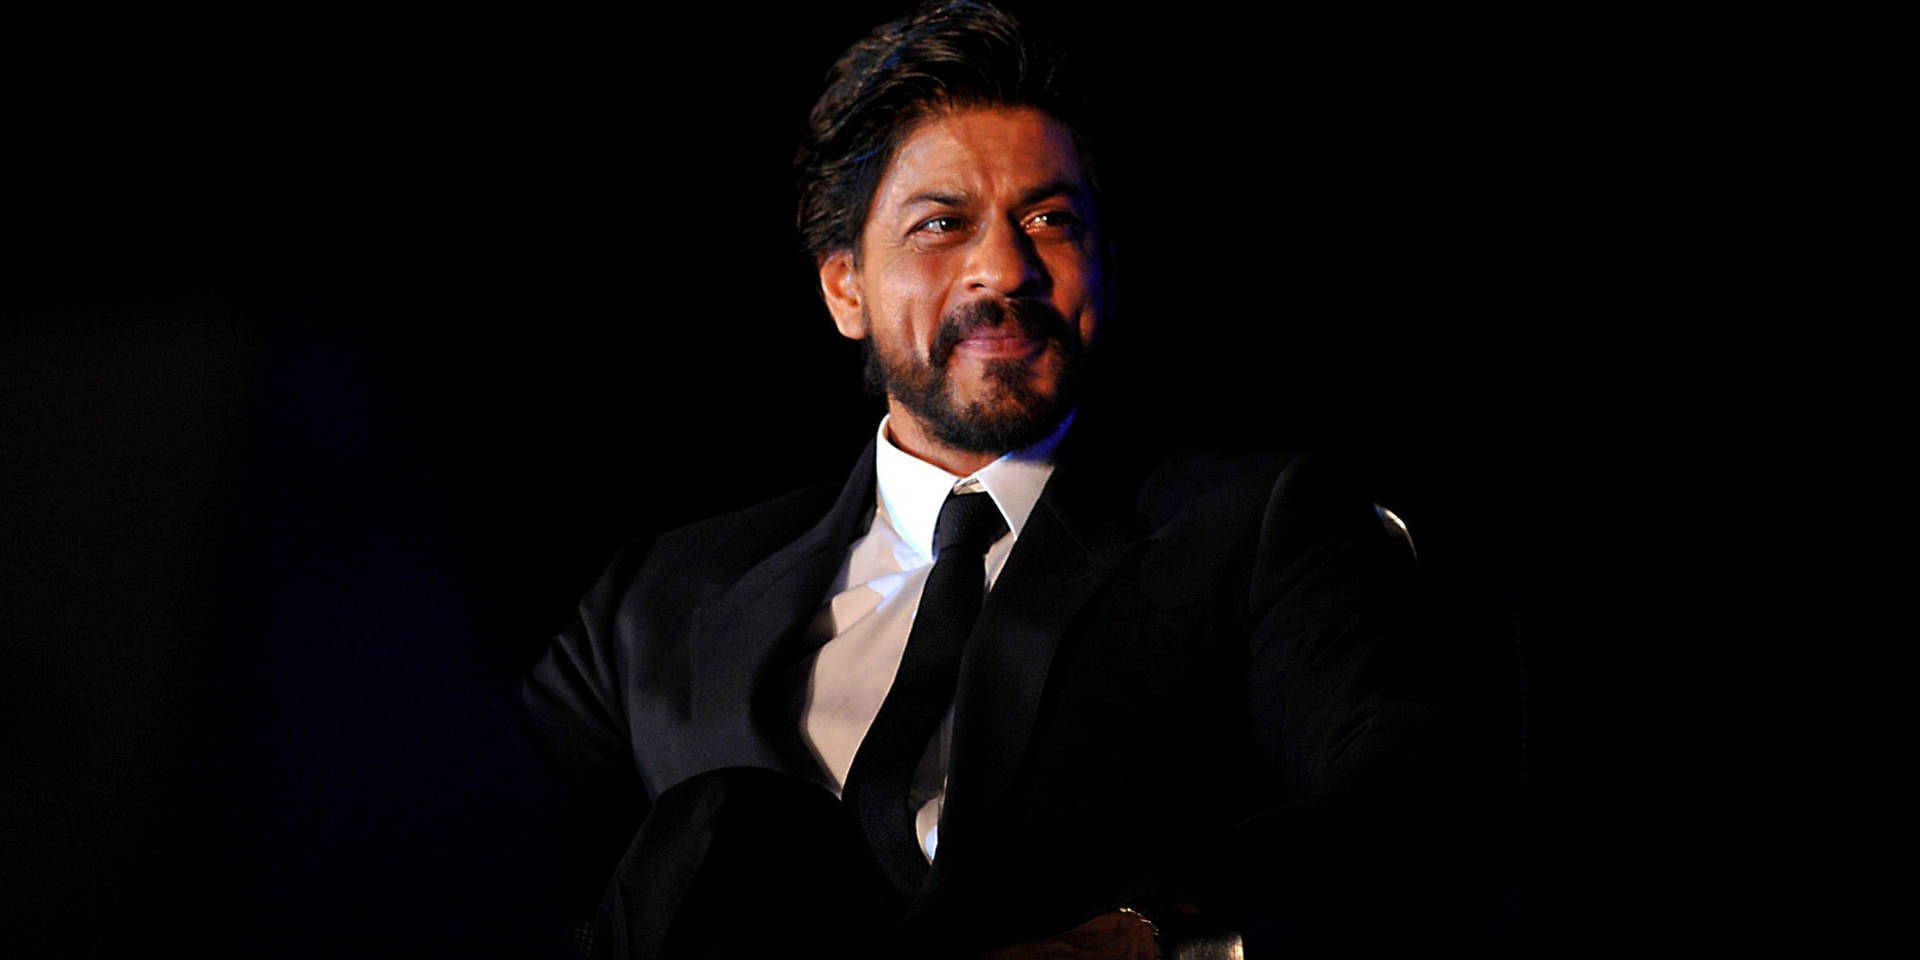 Shah Rukh Khan In Tuxedo Wallpaper